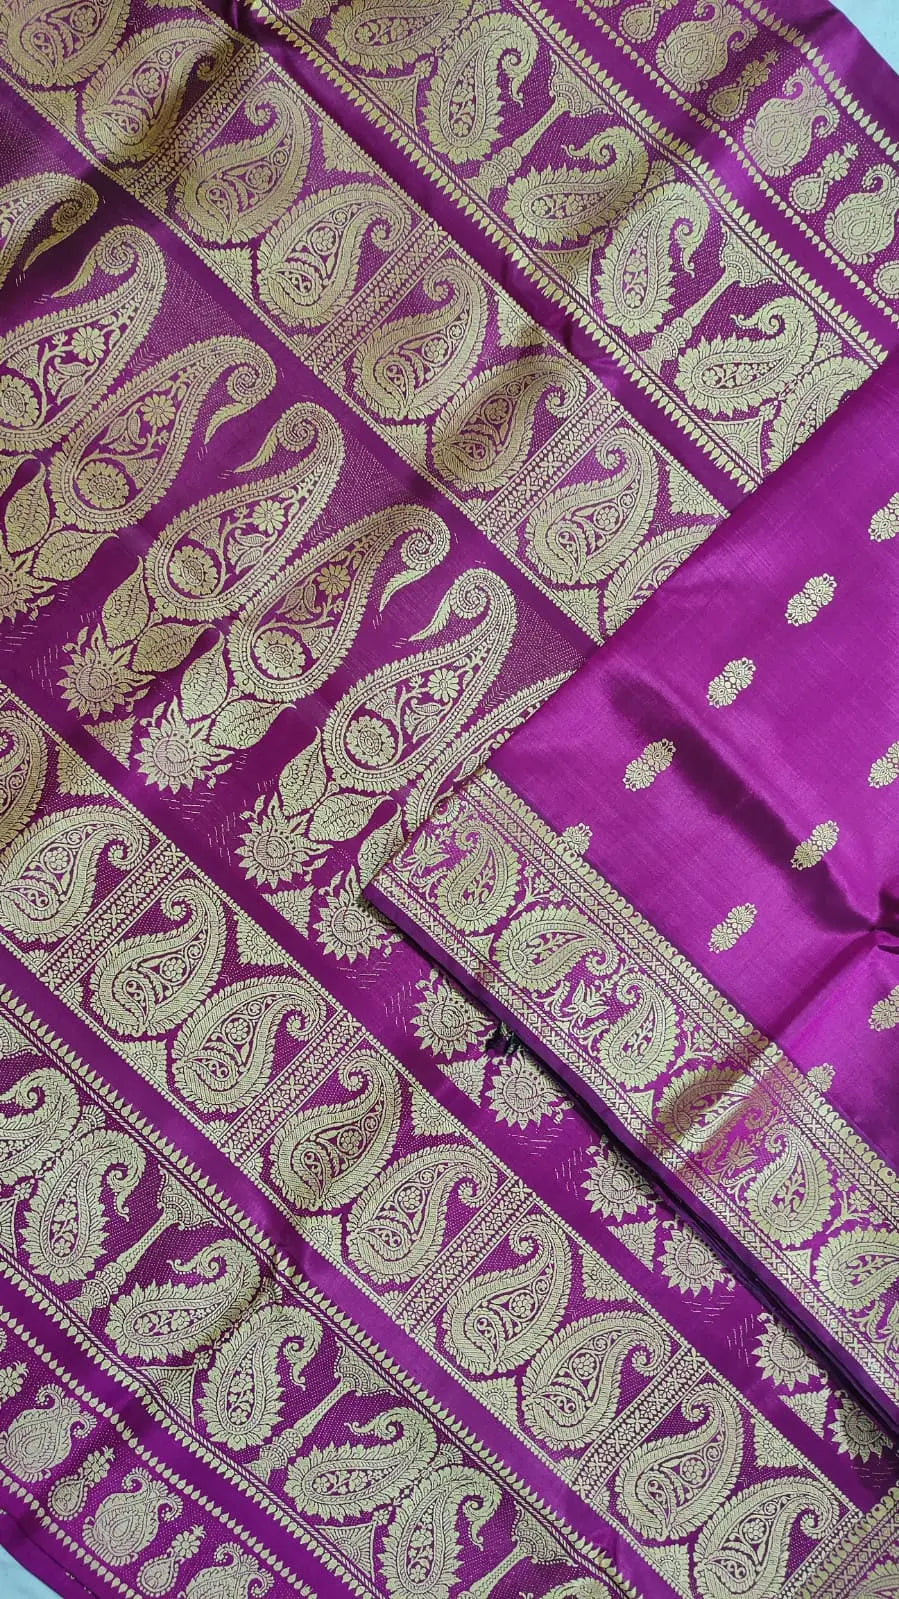 Baluchari saree Bengal original purple